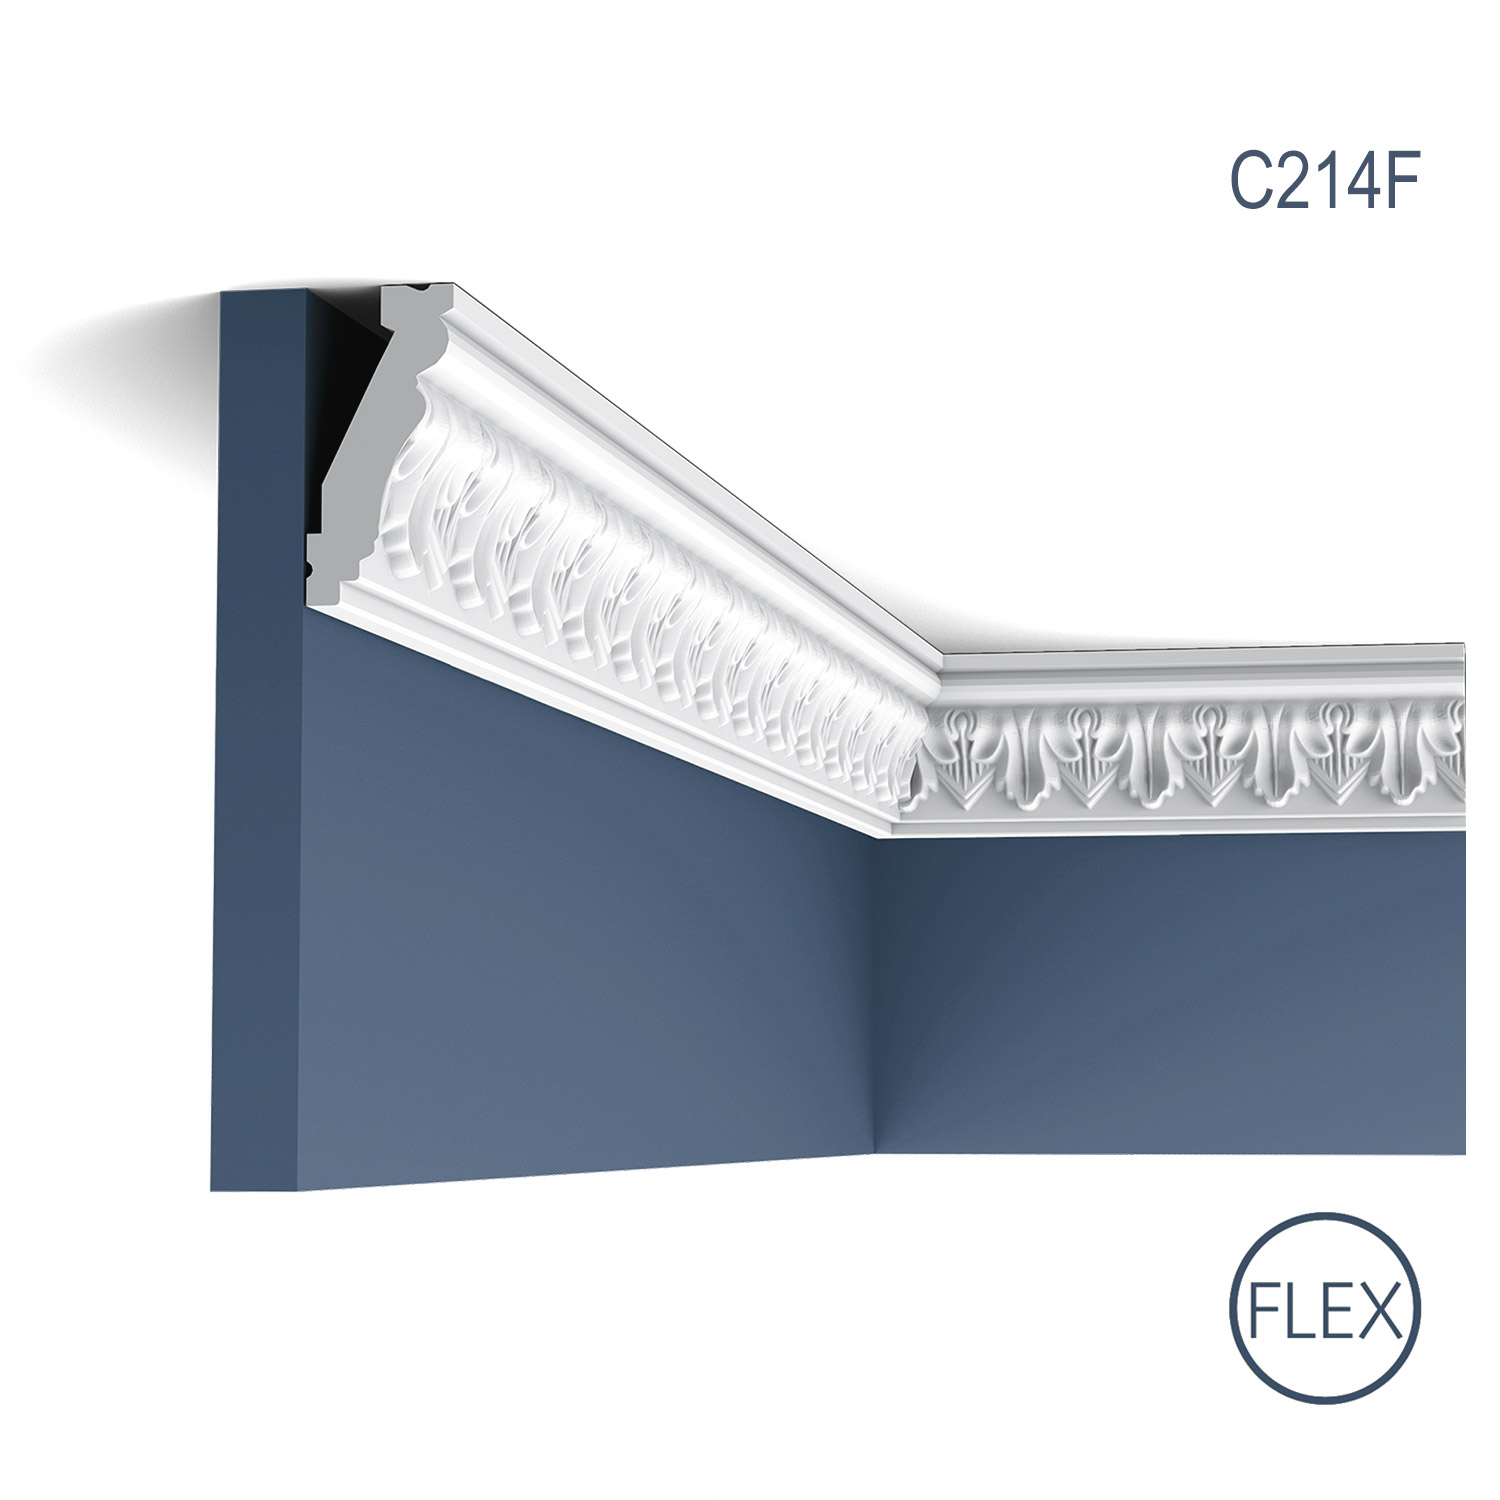 Cornisa Flex Luxxus C214F, Dimensiuni: 200 X 6.6 X 3.1 cm, Orac Decor